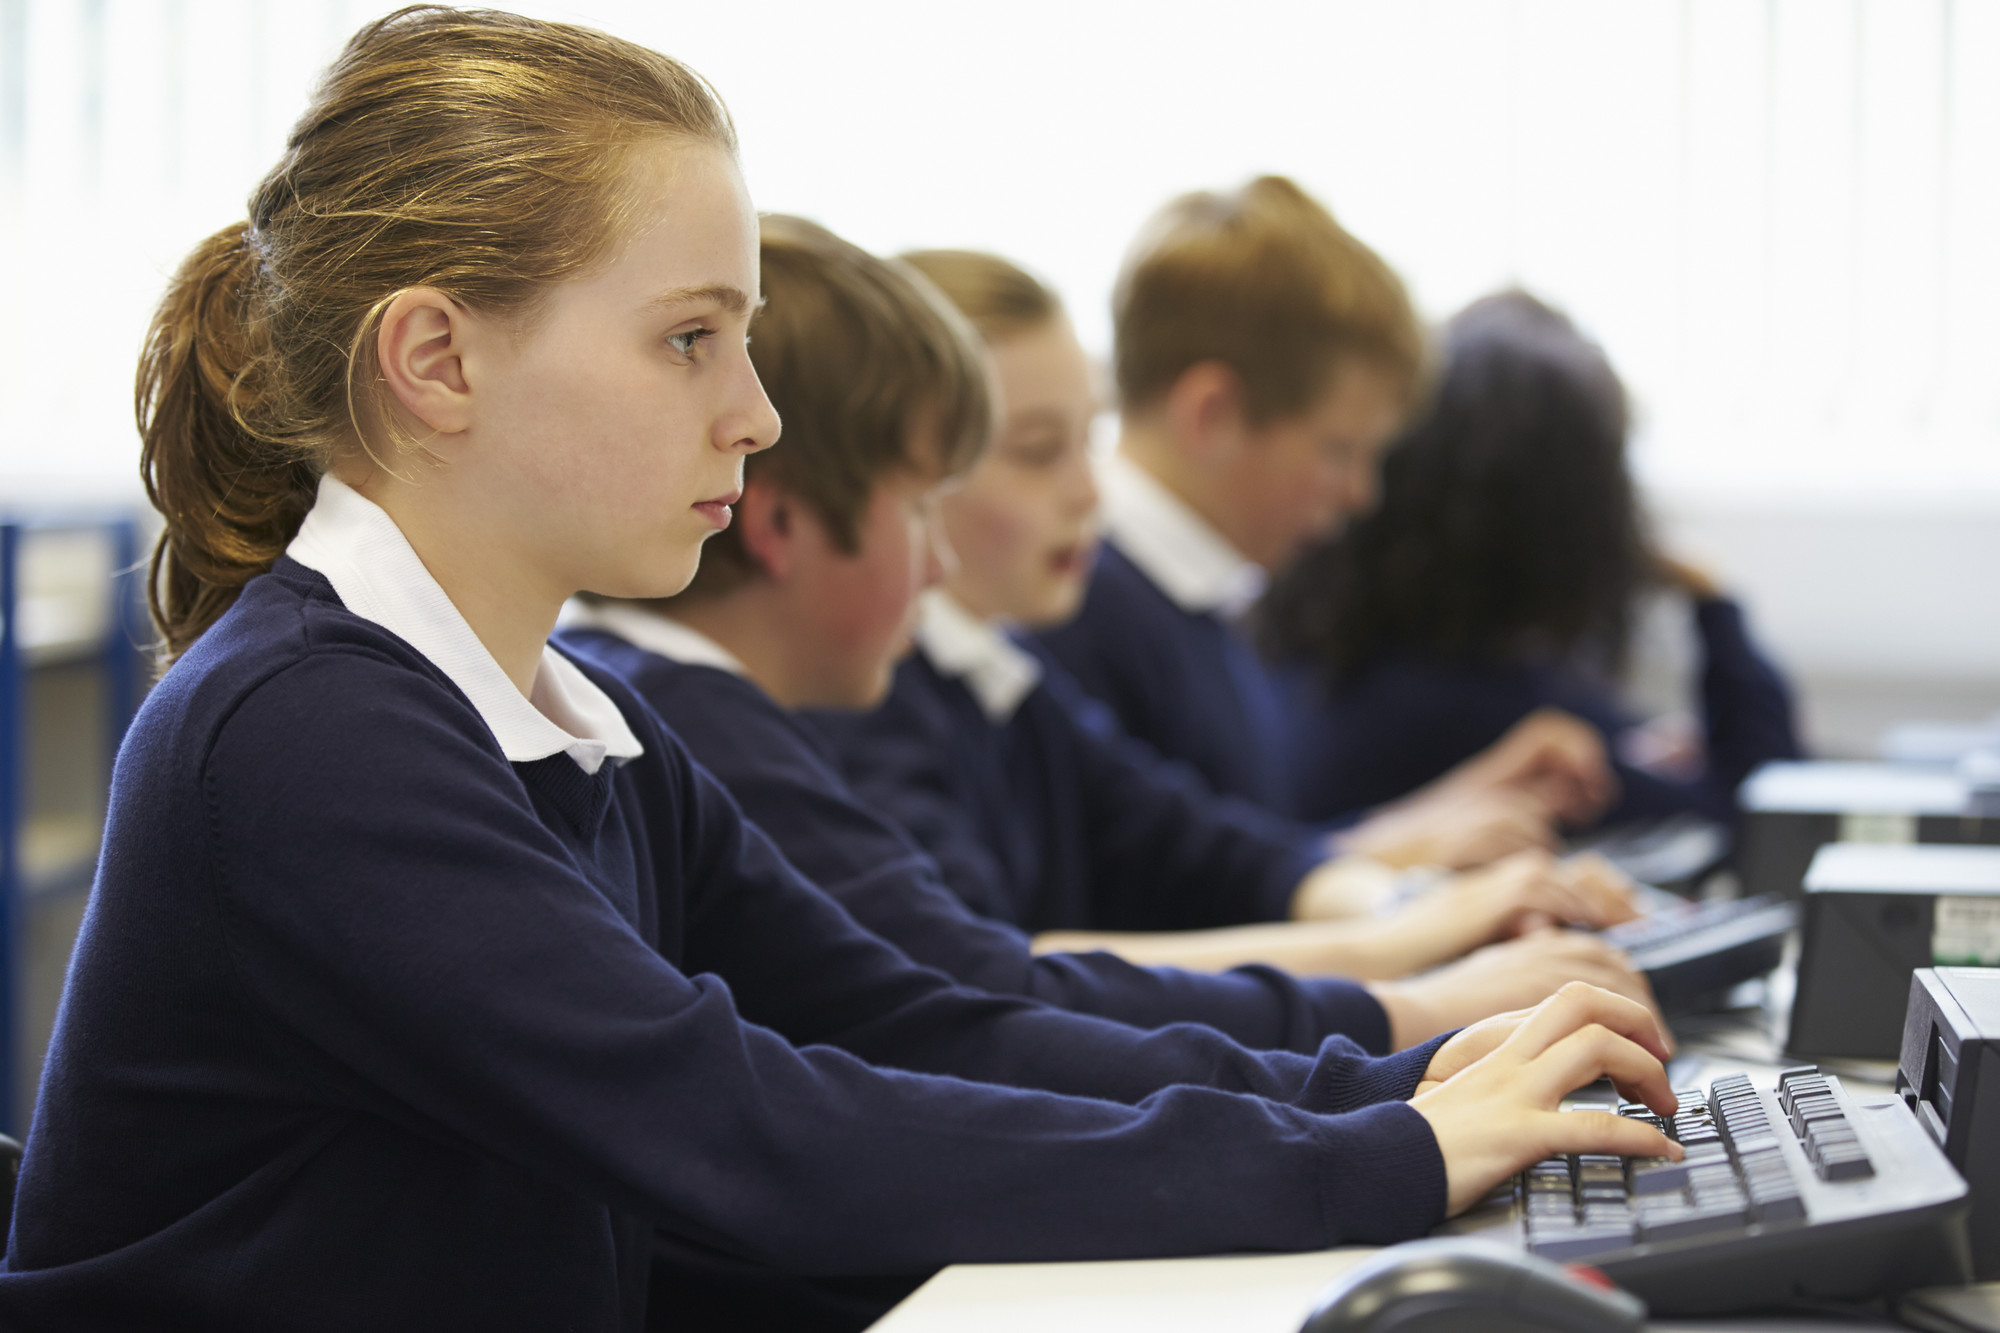 School children using technology